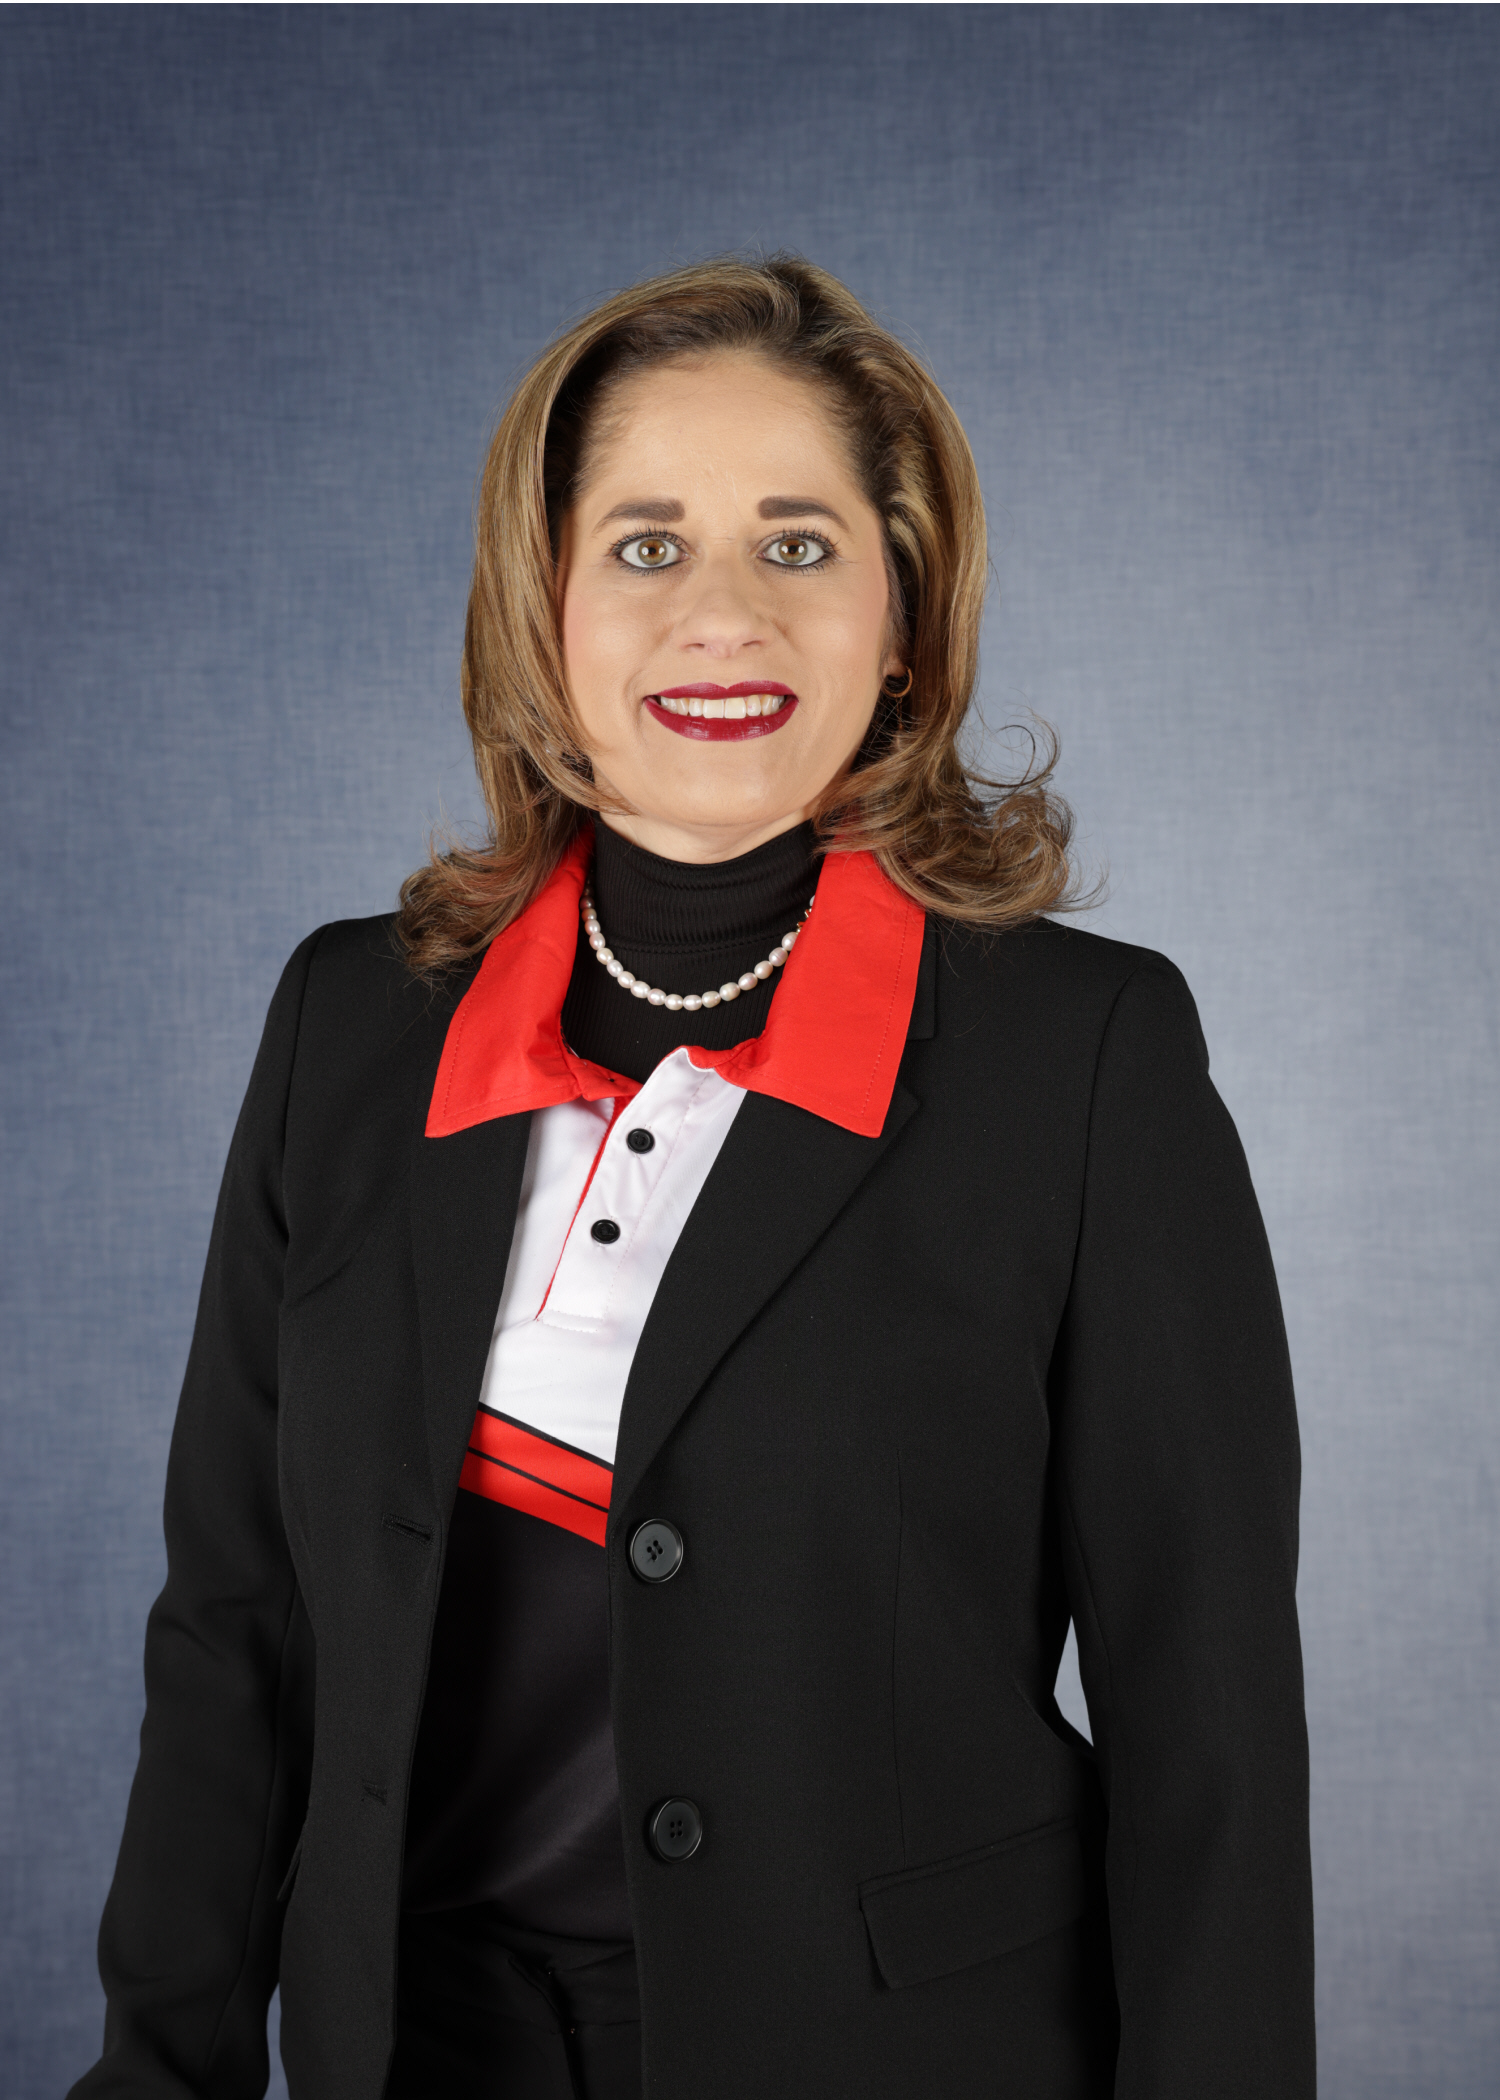 Mrs. Yesenia Gonzalez, Principal